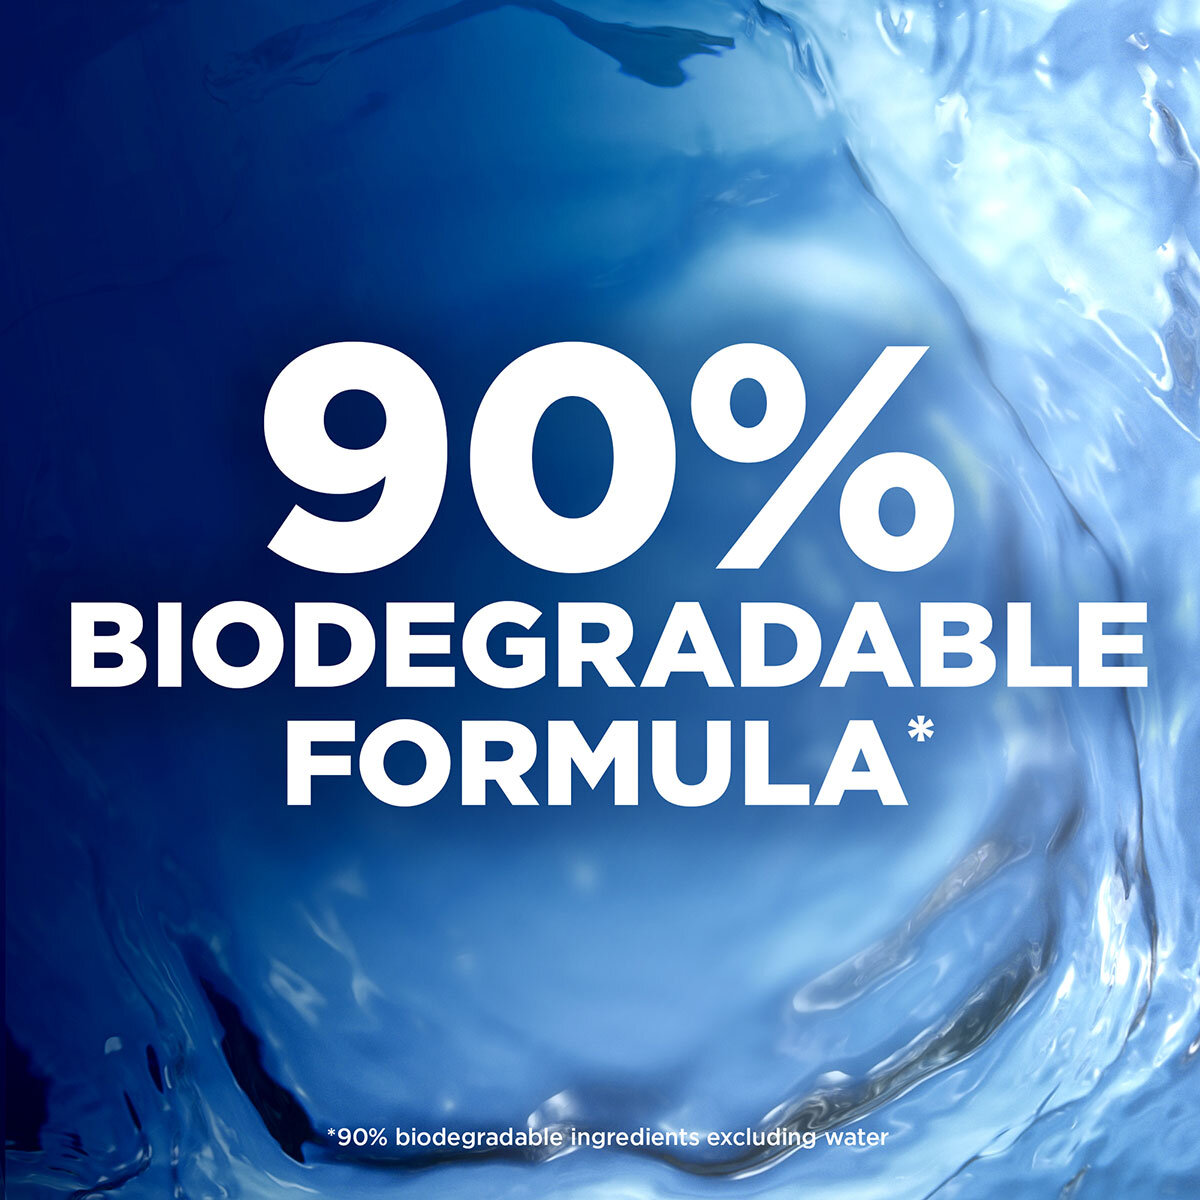 90% Biodegradable Formula